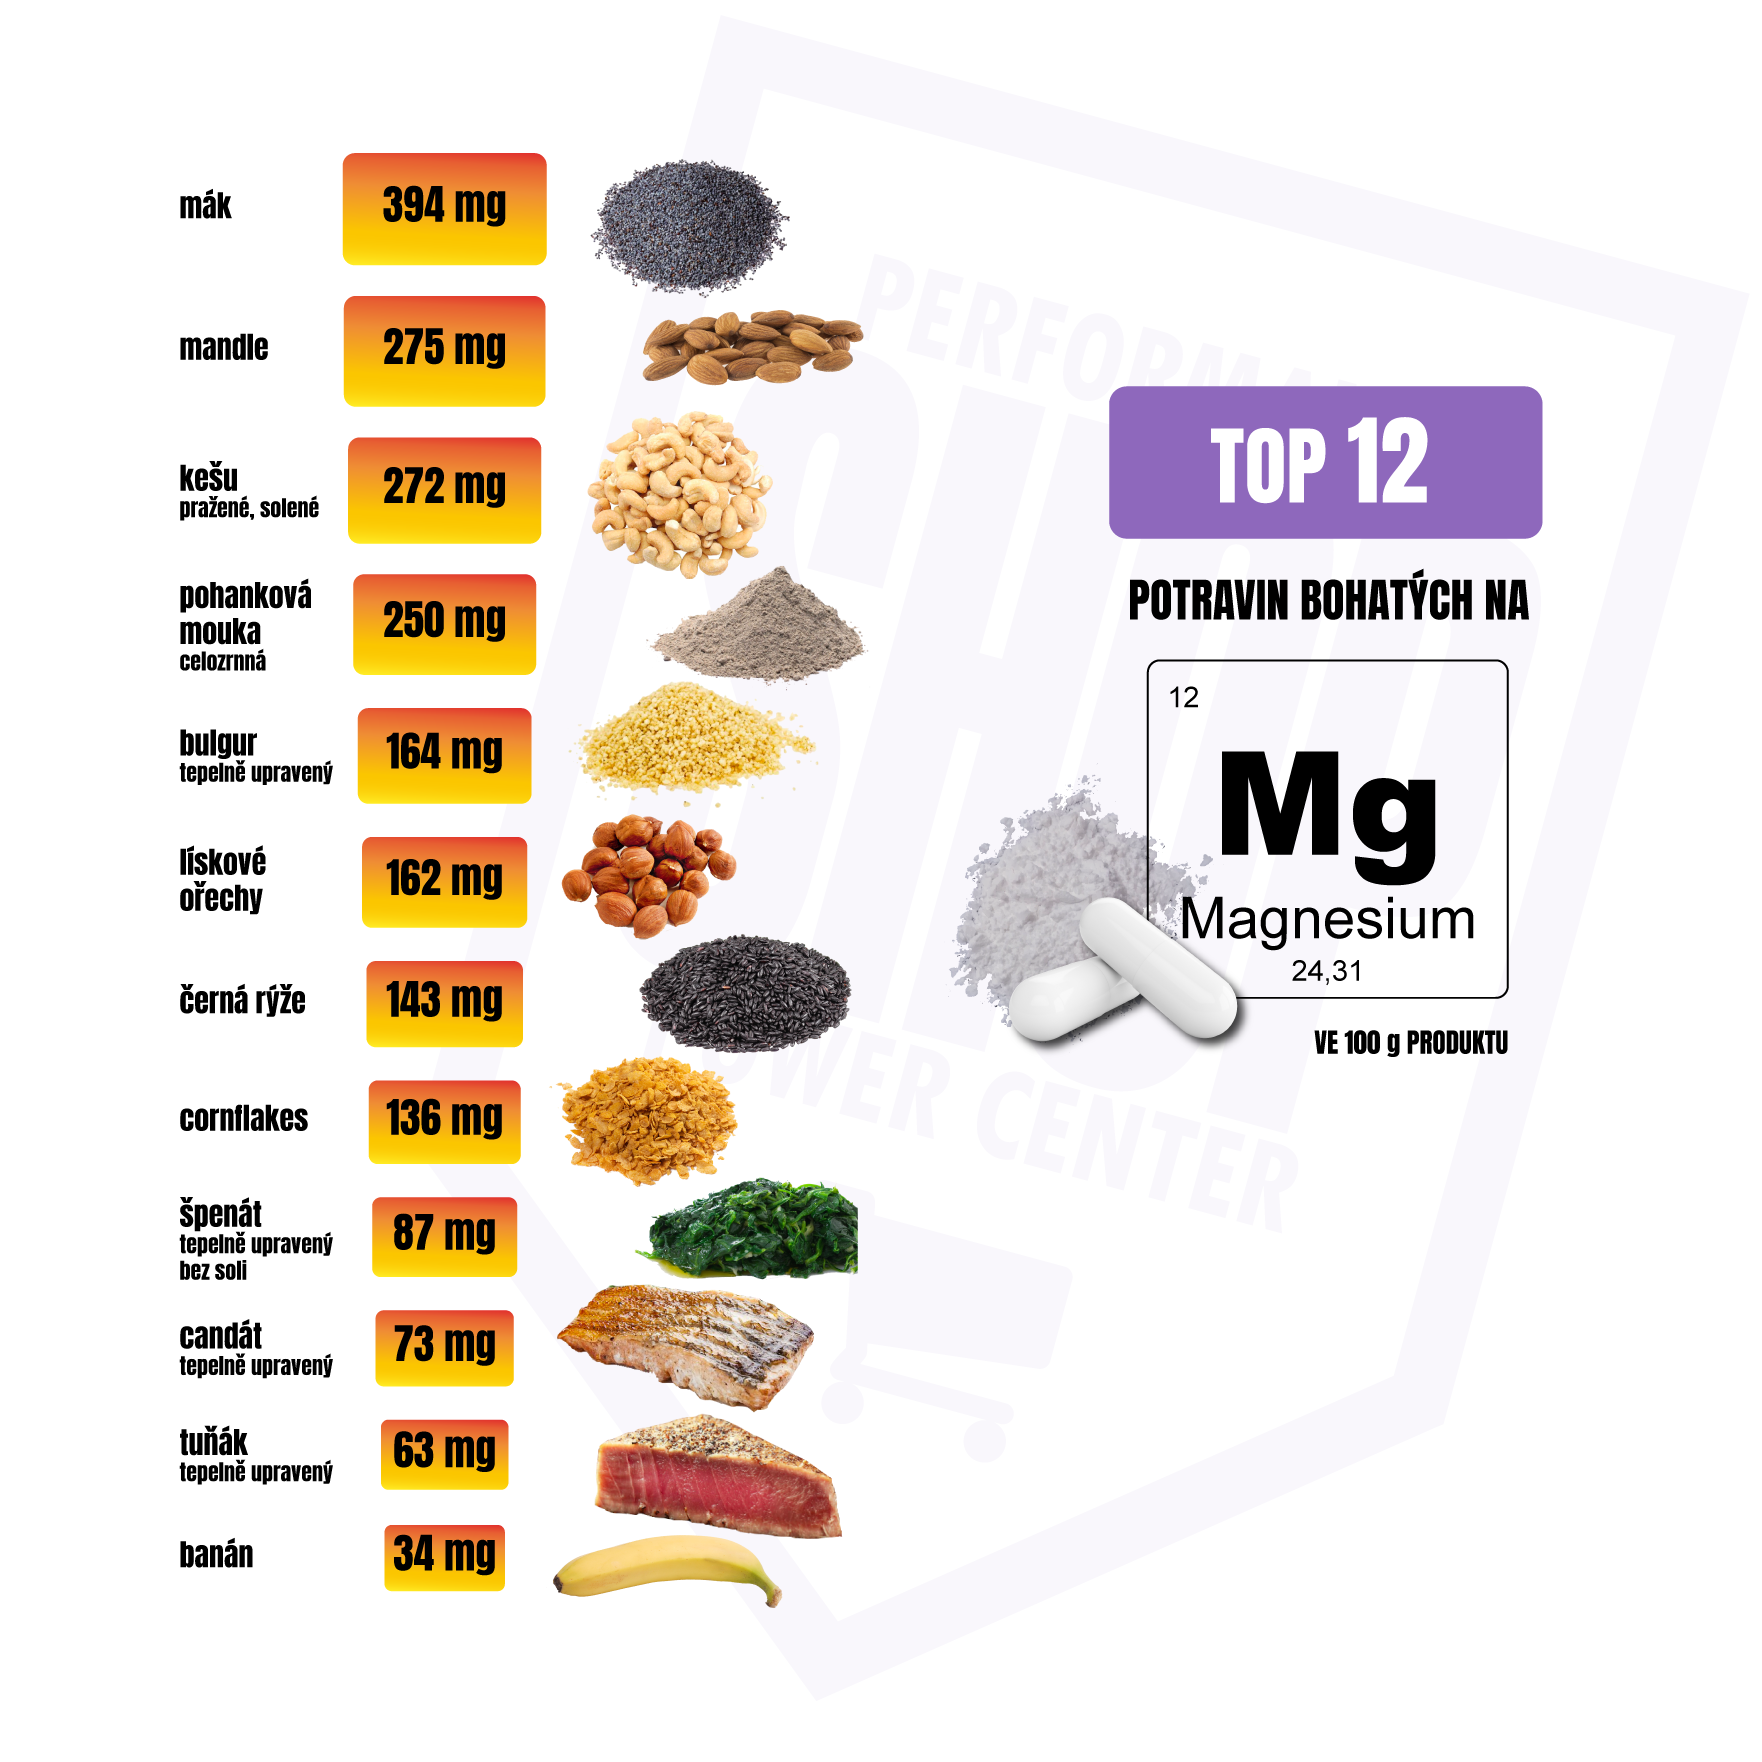 potraviny bohate na magnesium (zdroje magnesia)